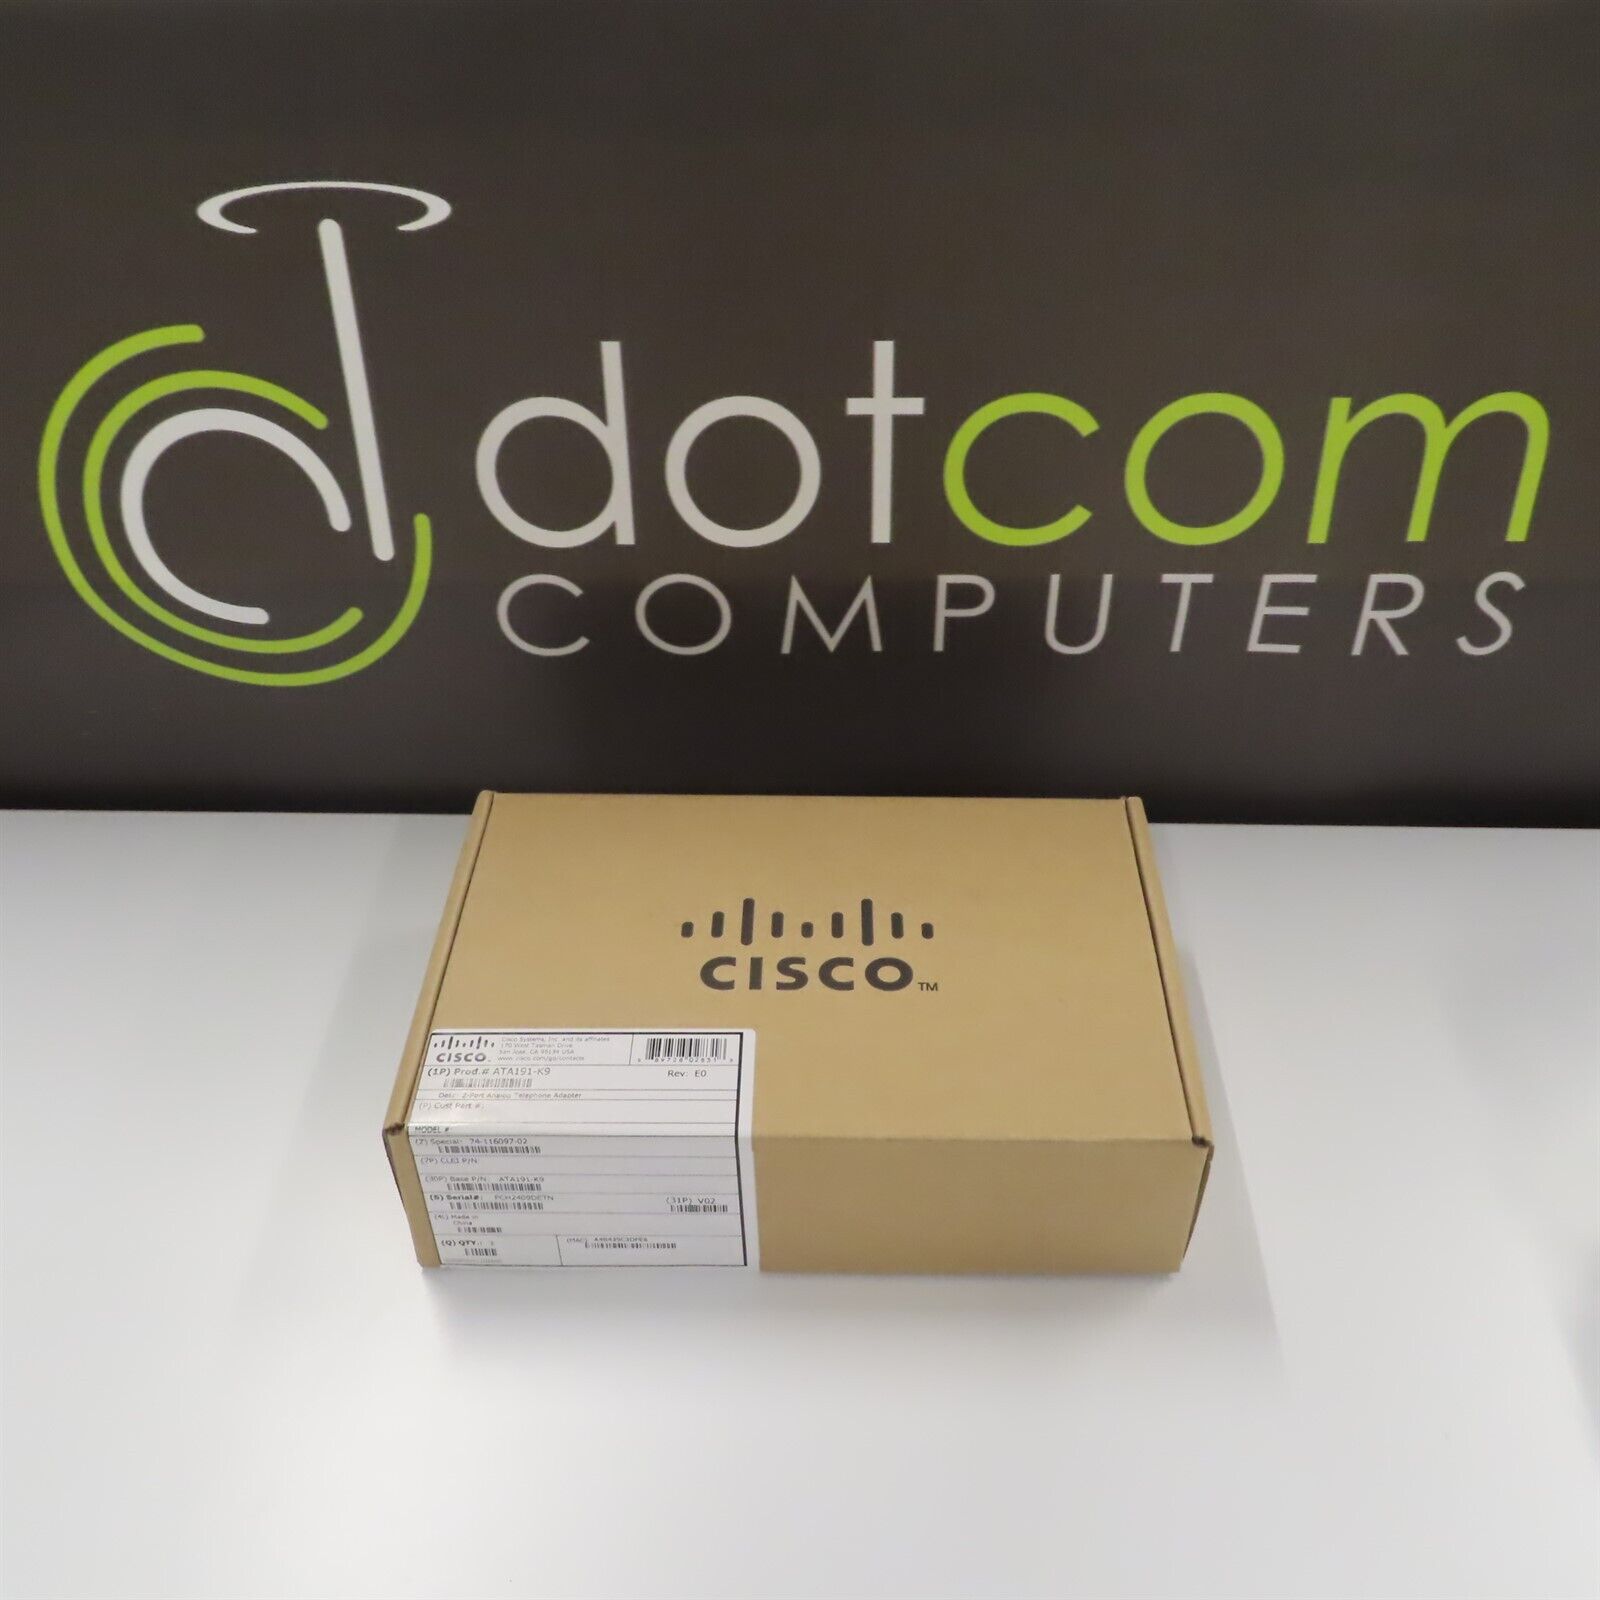 Cisco ATA 191 Analog Terminal Adapter ( ATA191-K9 ) - Brand New 1-Year Warranty